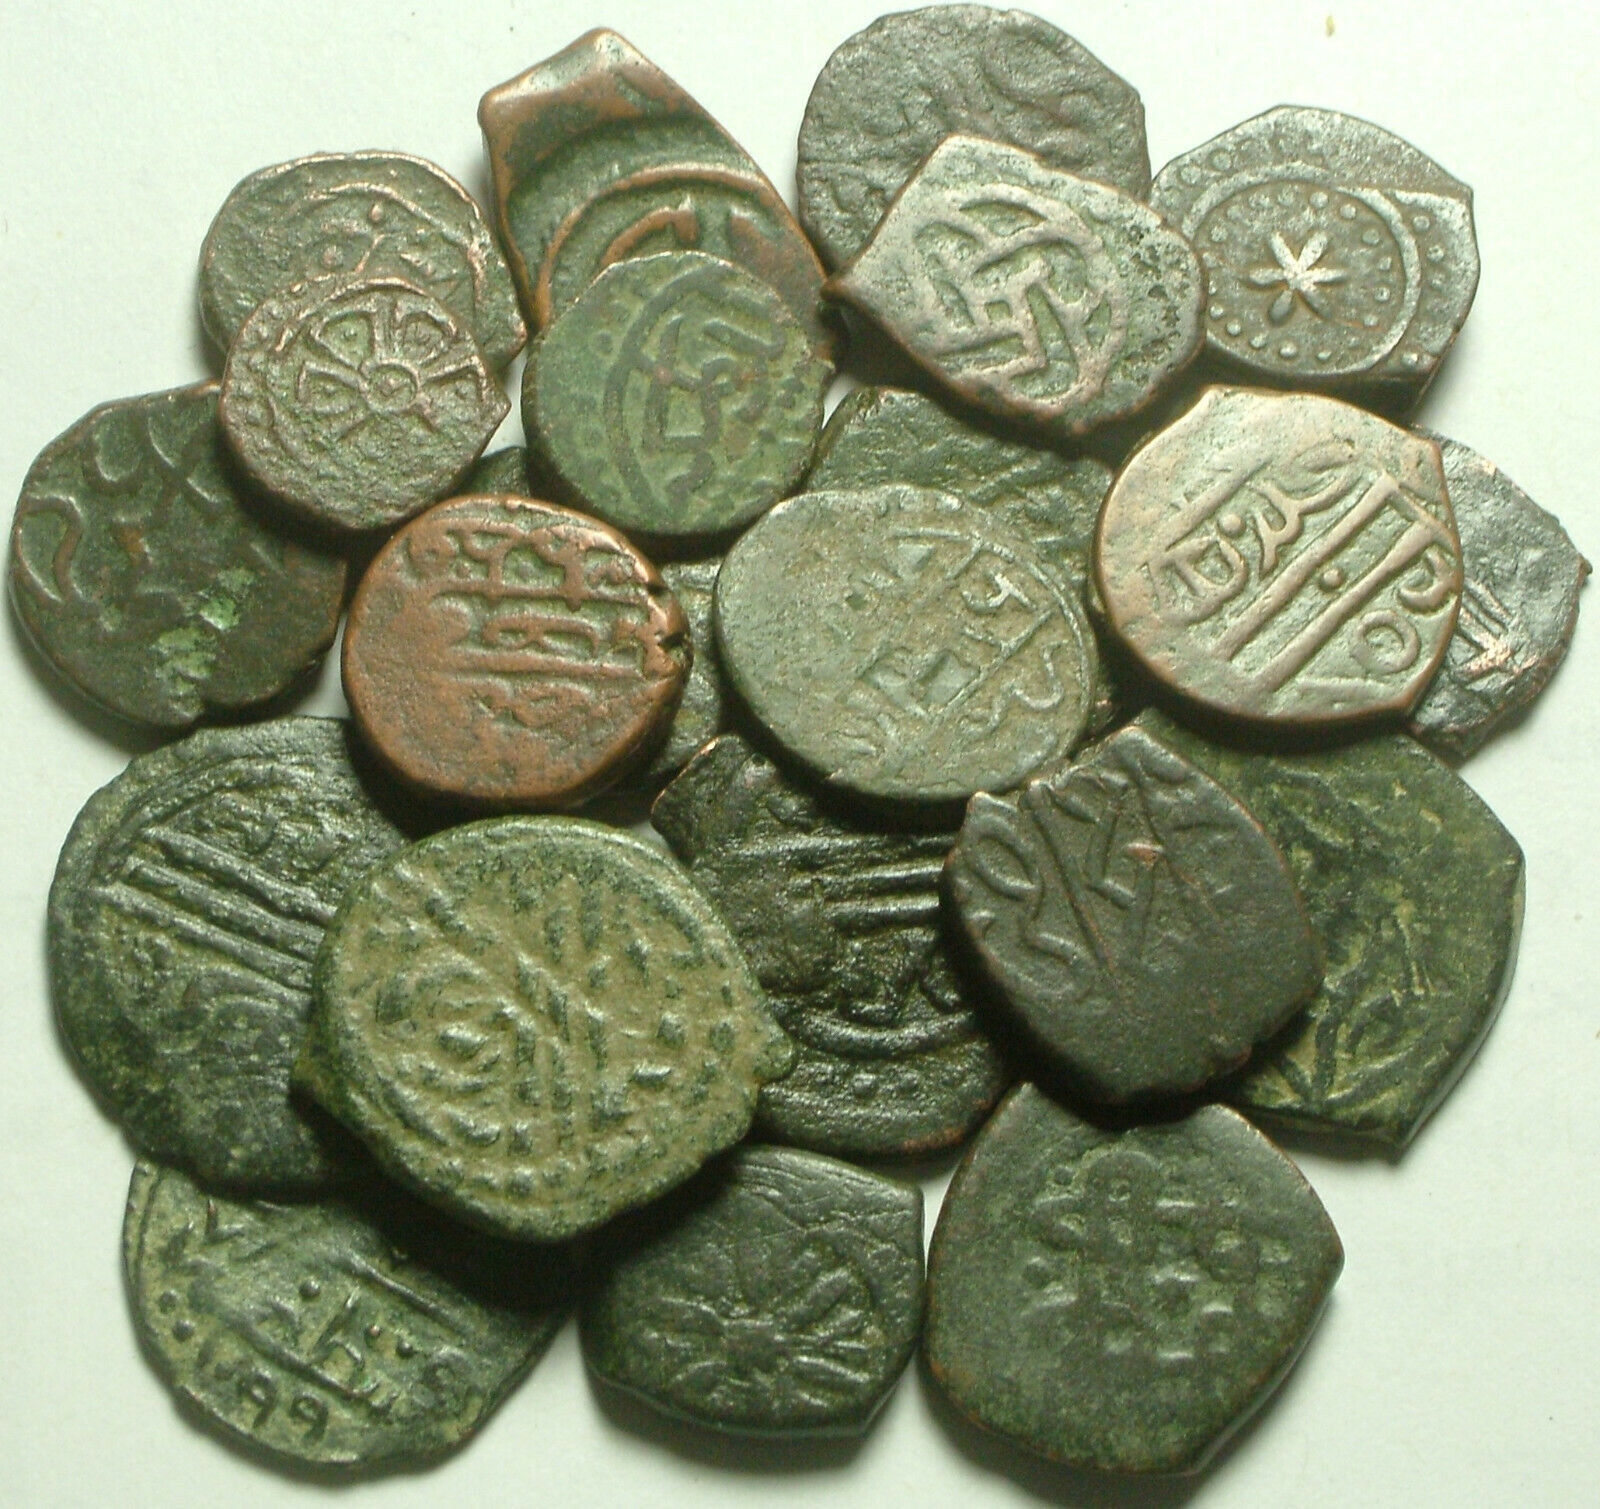 Lot 3 Rare original Islamic copper Bronze Mangir coins/Arabic/Ottoman Empire 15c Без бренда - фотография #5